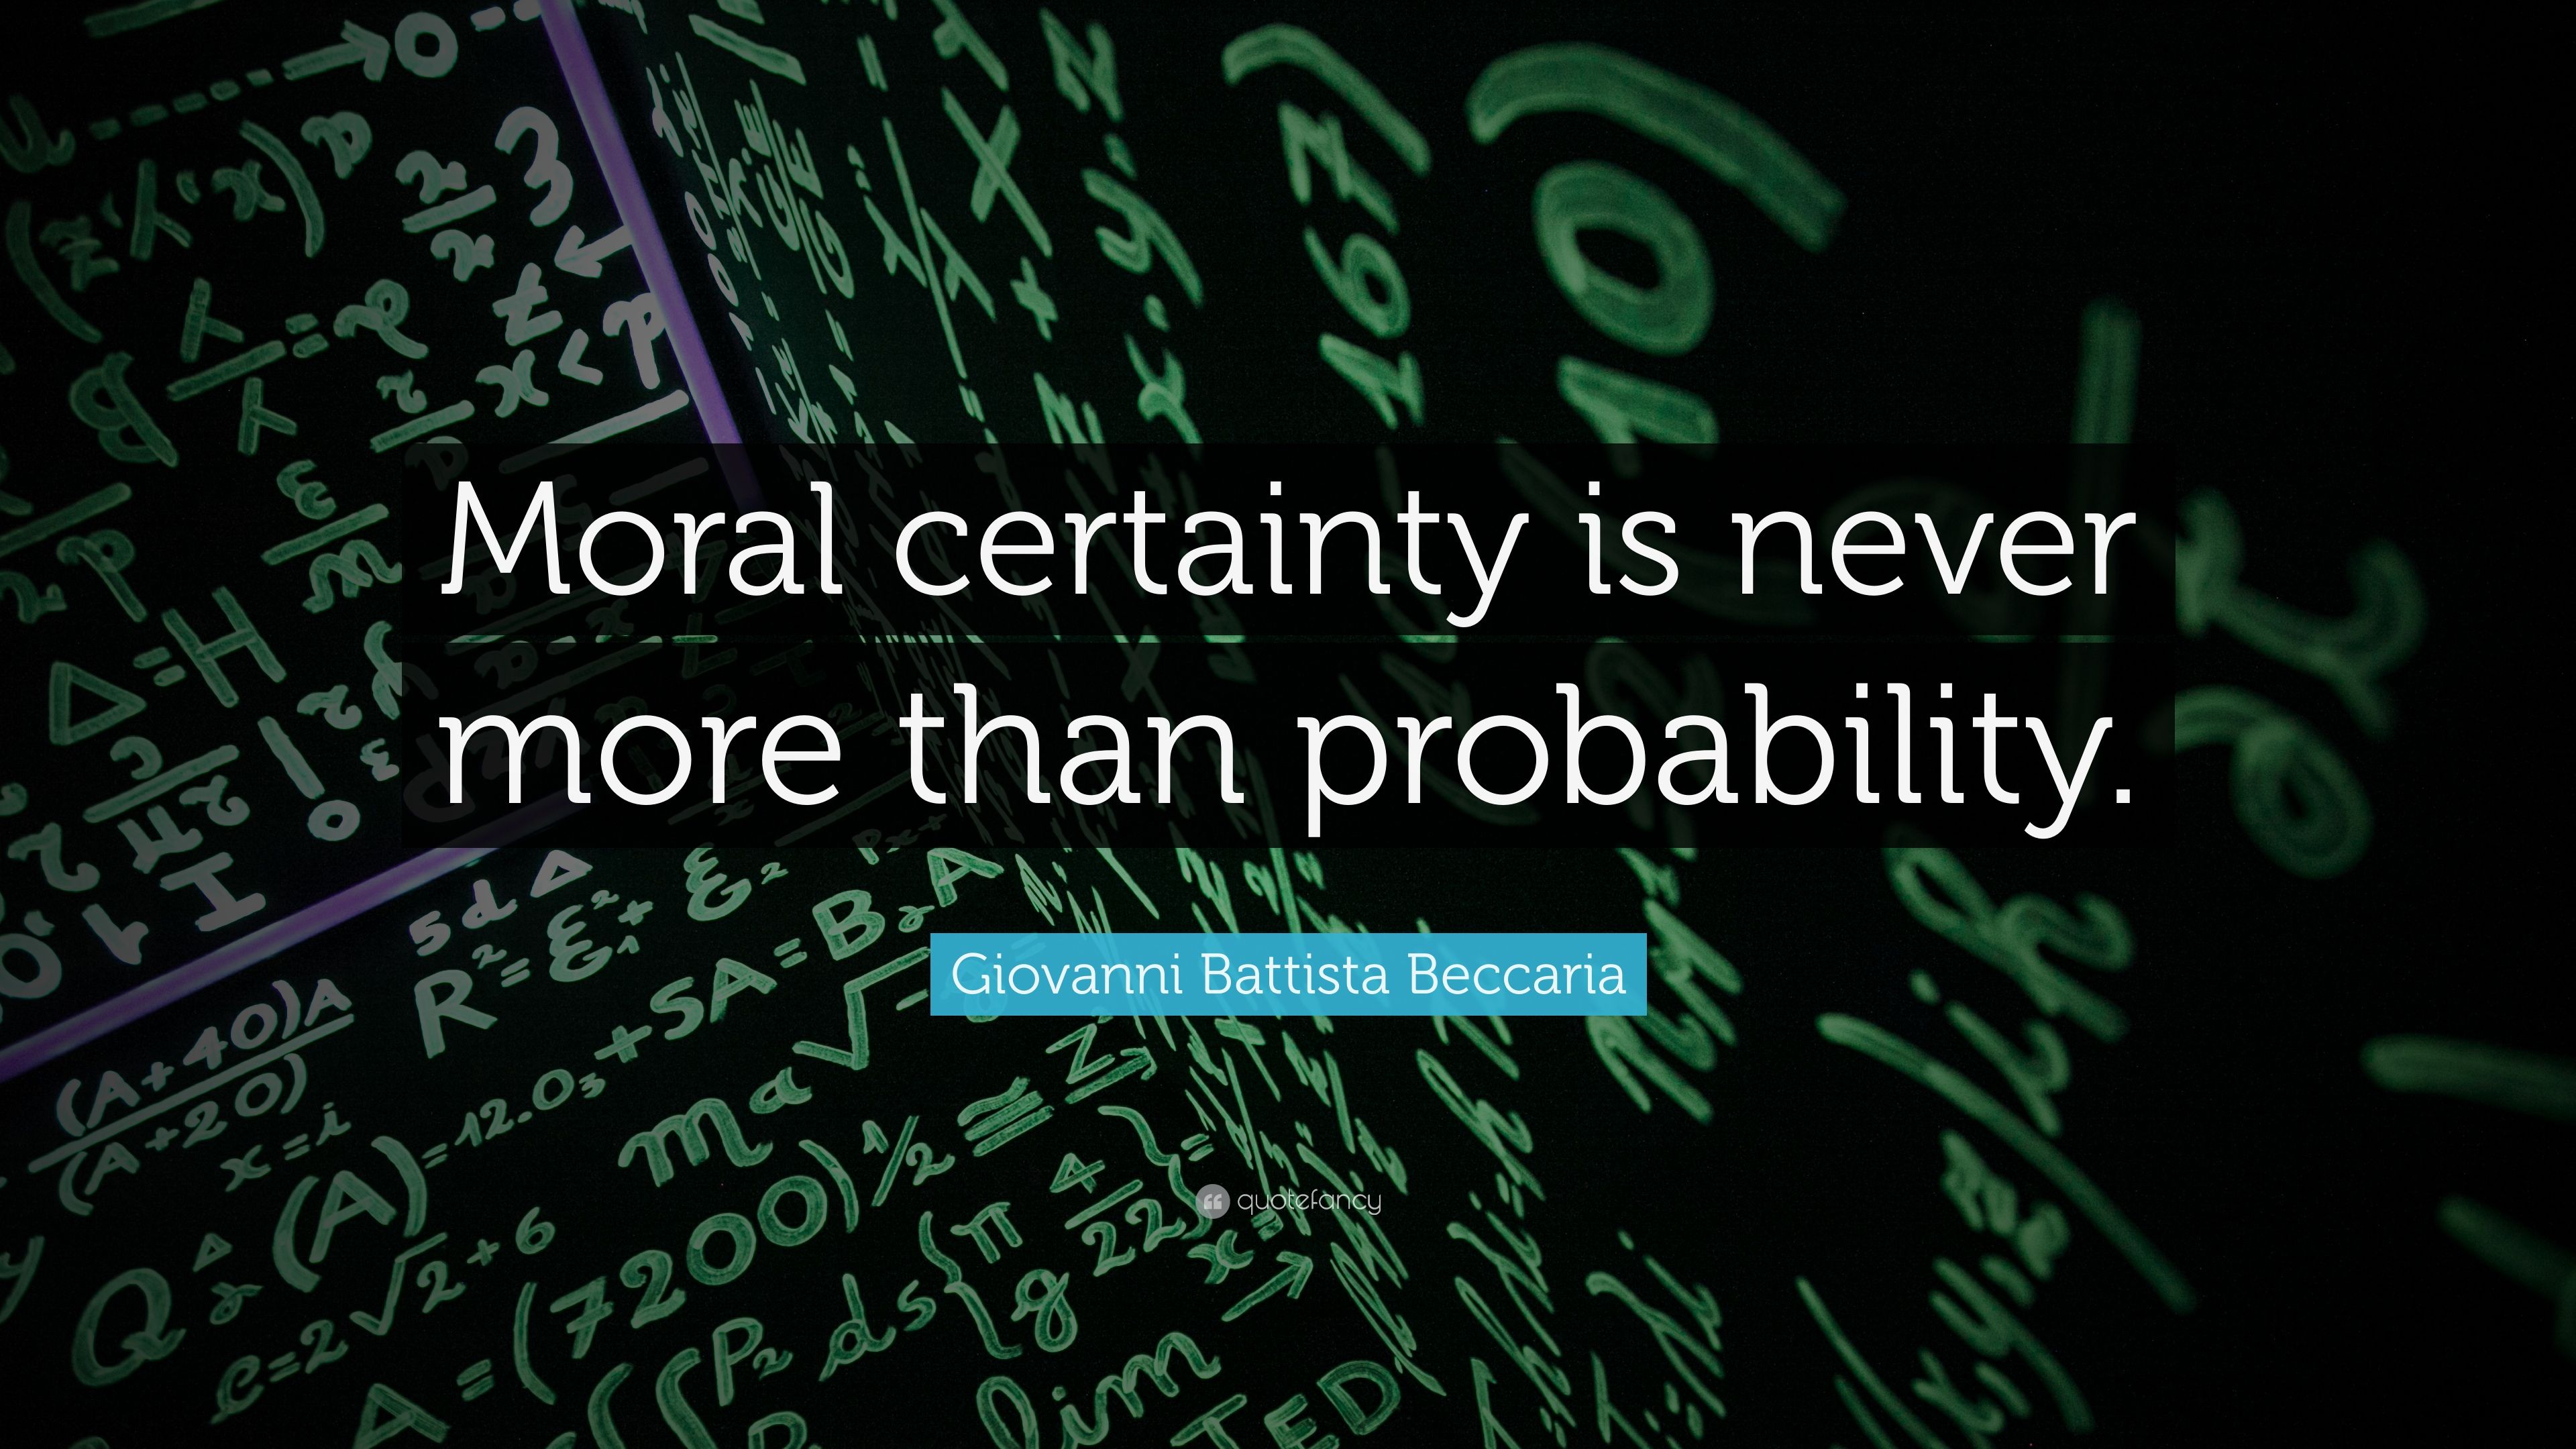 Giovanni Battista Beccaria Quote: “Moral certainty is never more than probability.” (7 wallpaper)